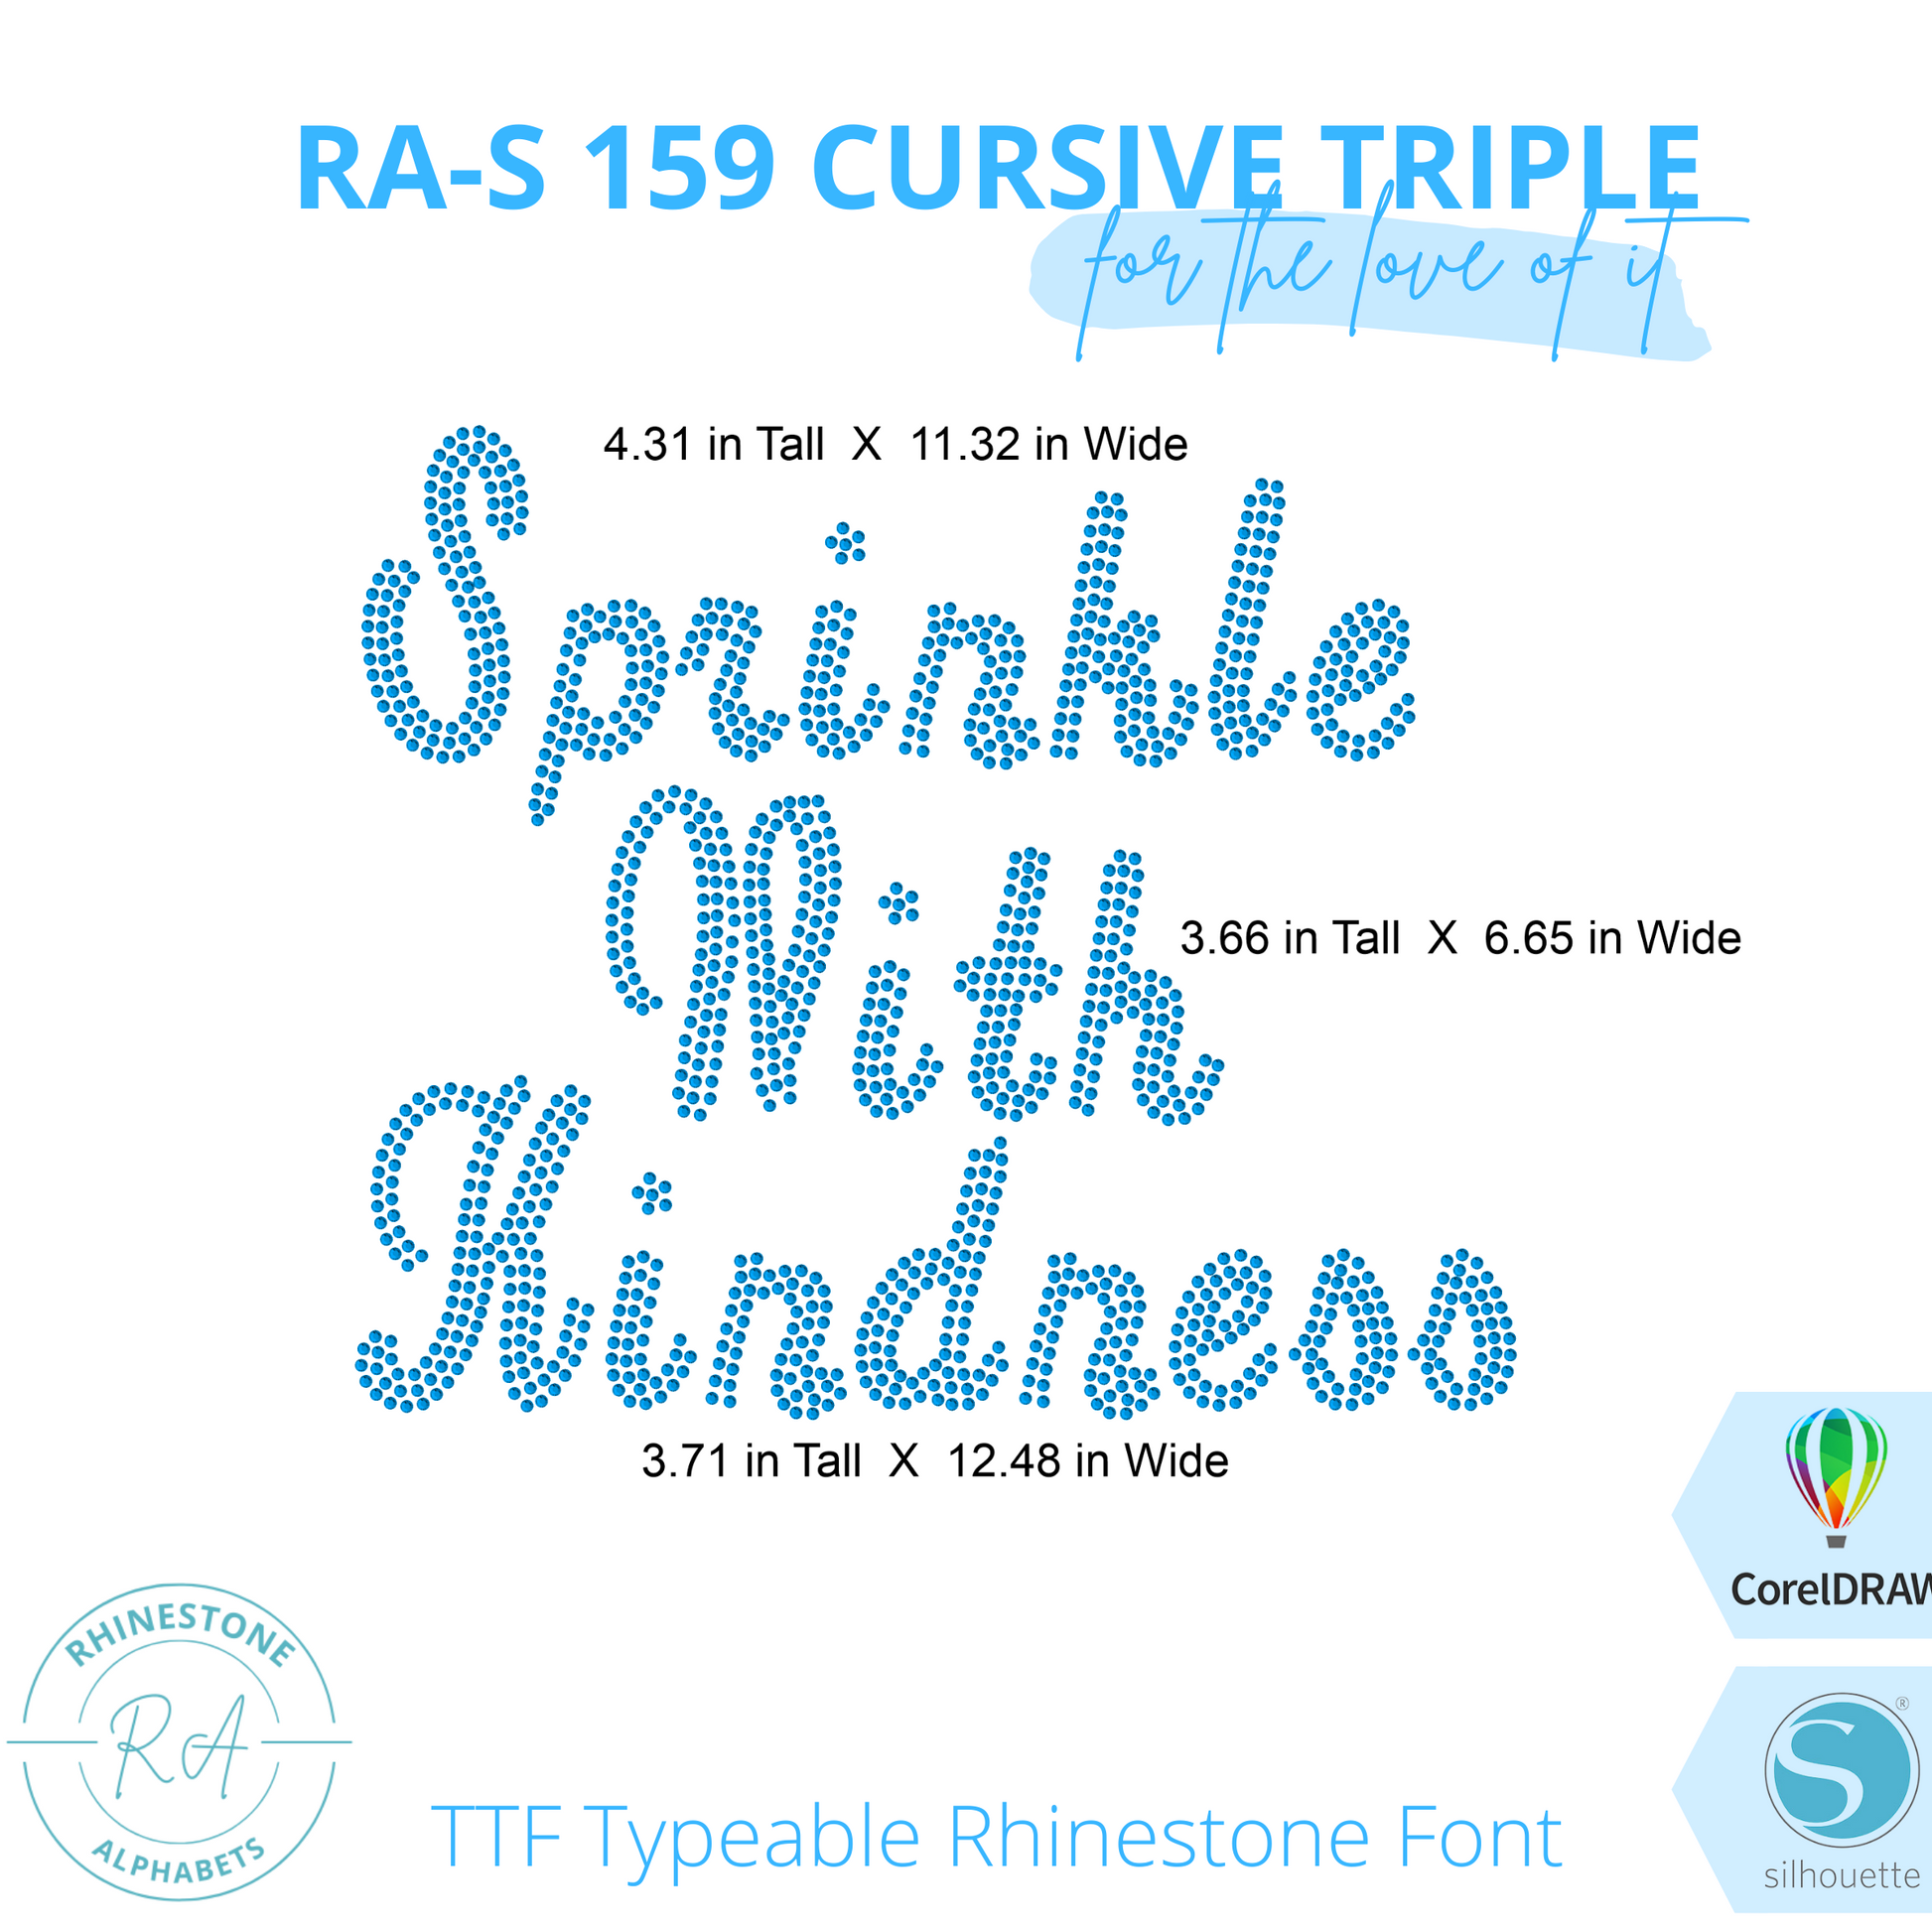 RA-S 159 Cursive Triple - RhinestoneAlphabets